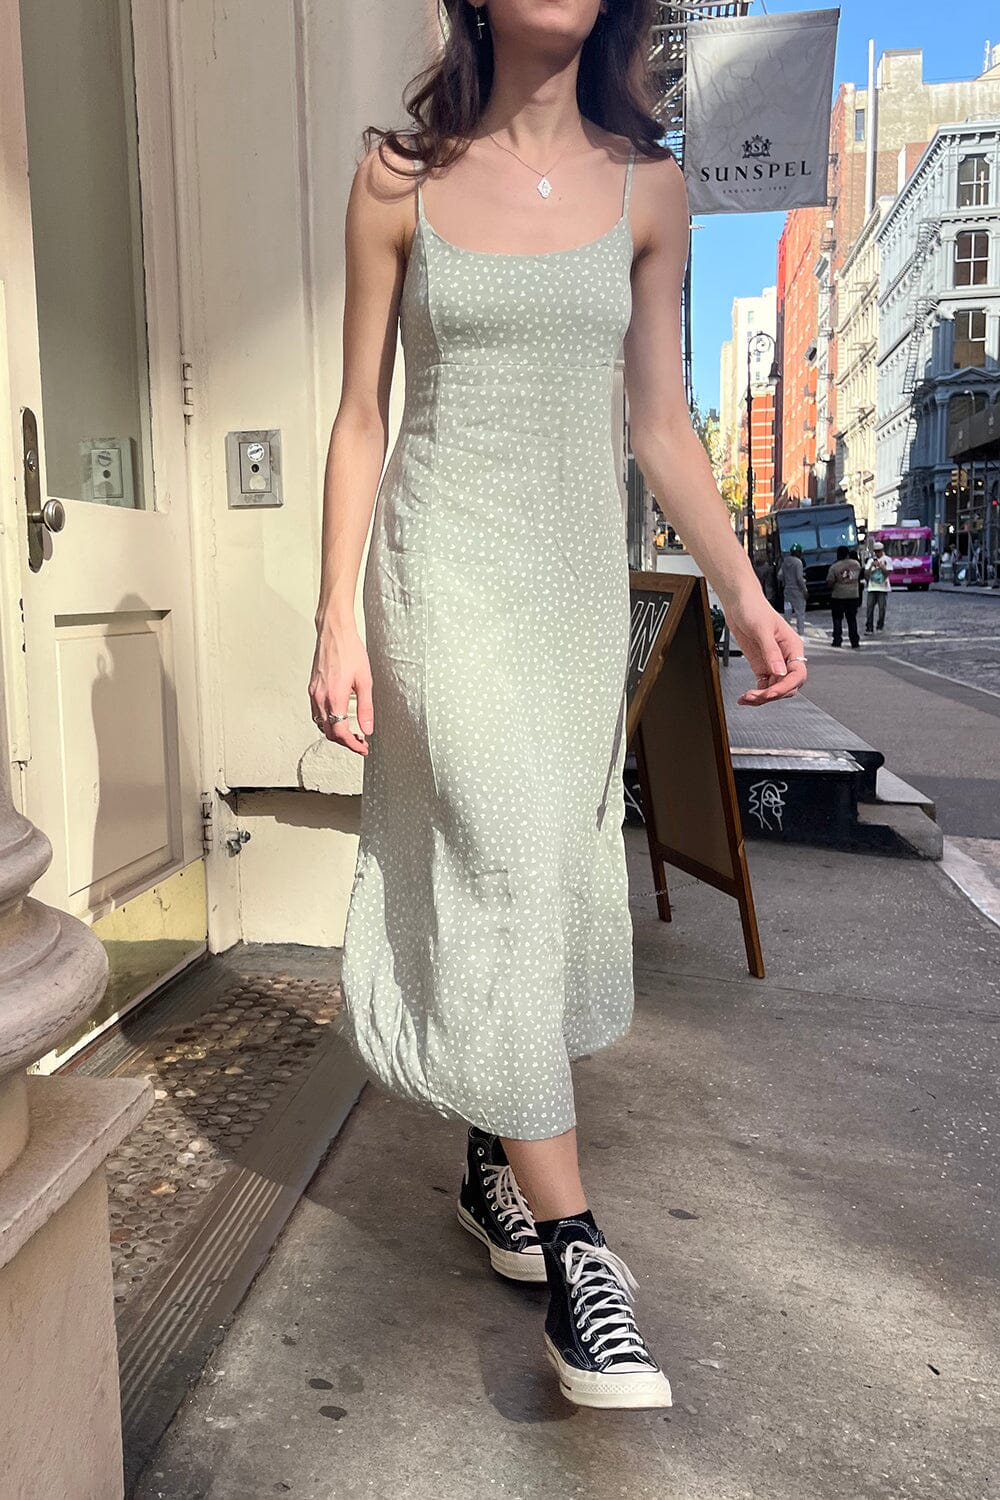 Brandy Melville - Colleen dress on Designer Wardrobe